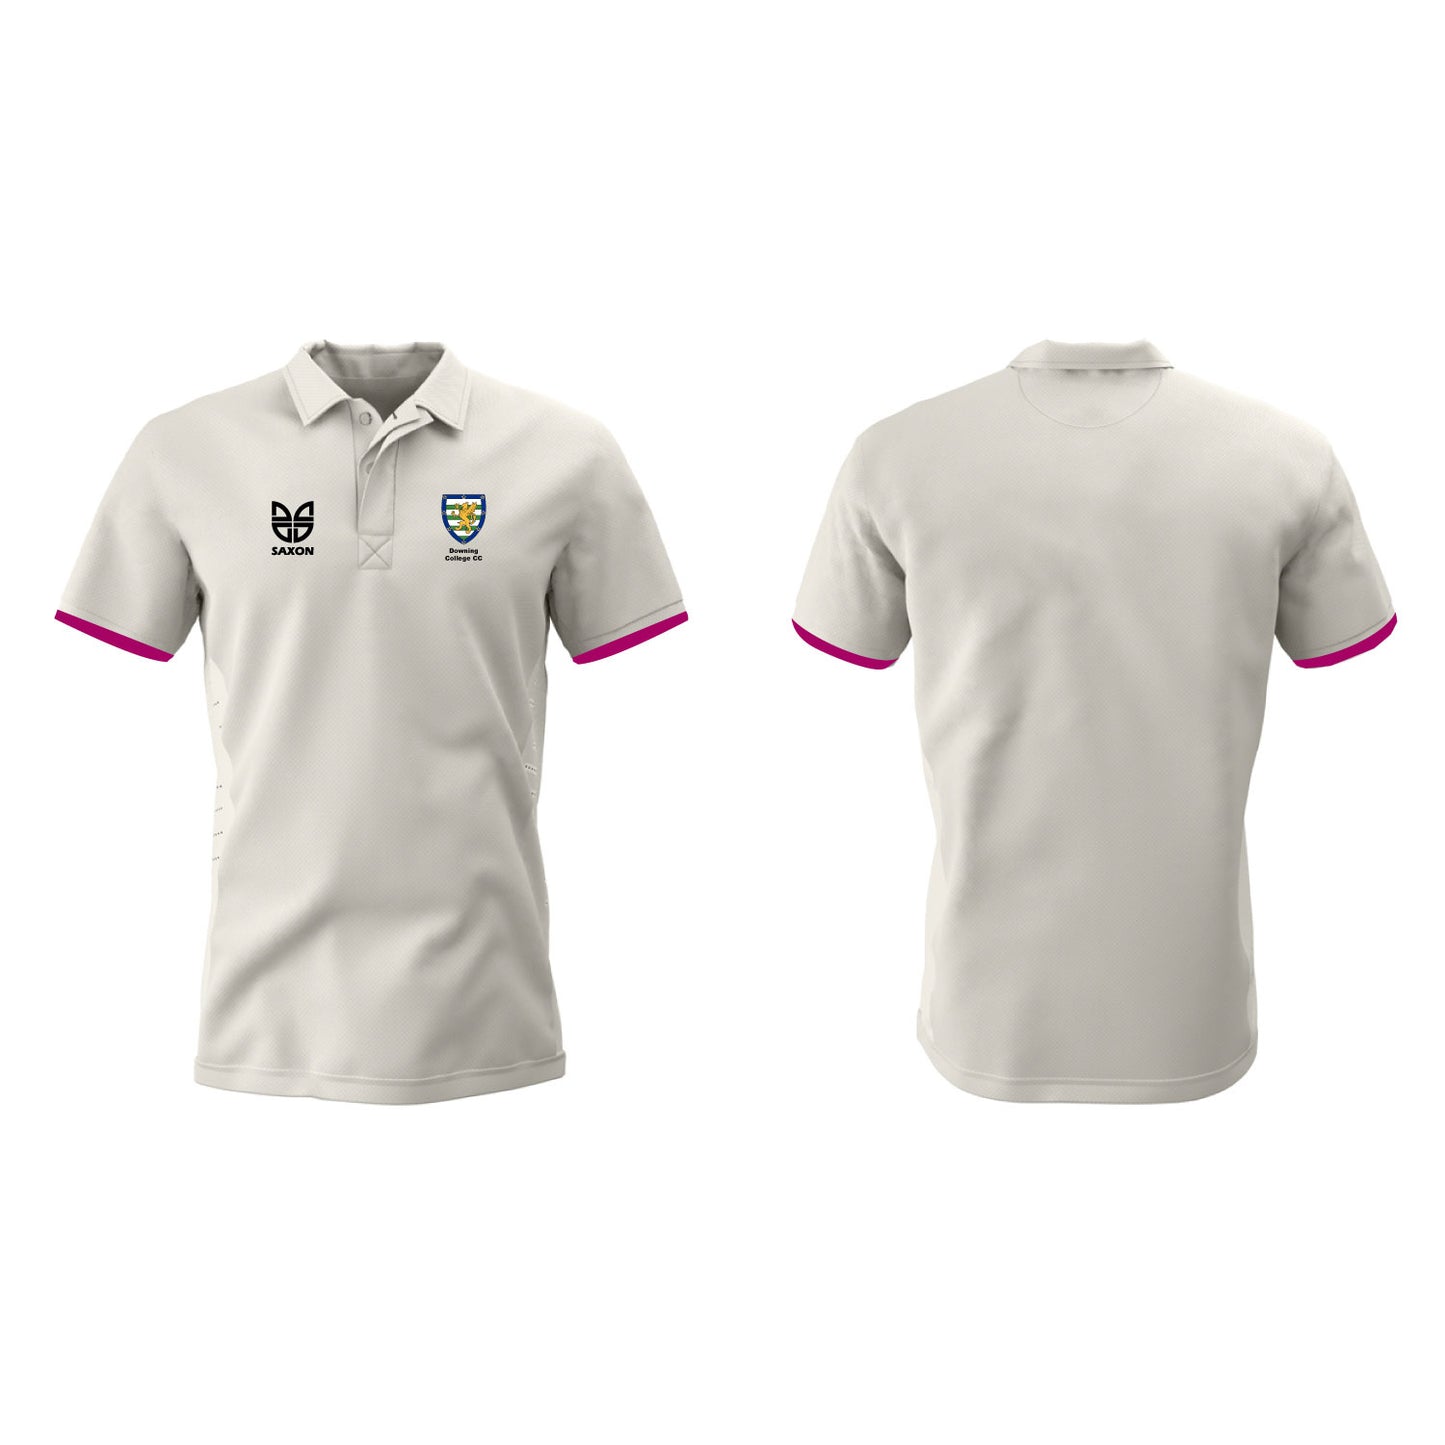 Downing College Cricket Club Short Sleeve Cricket Shirt